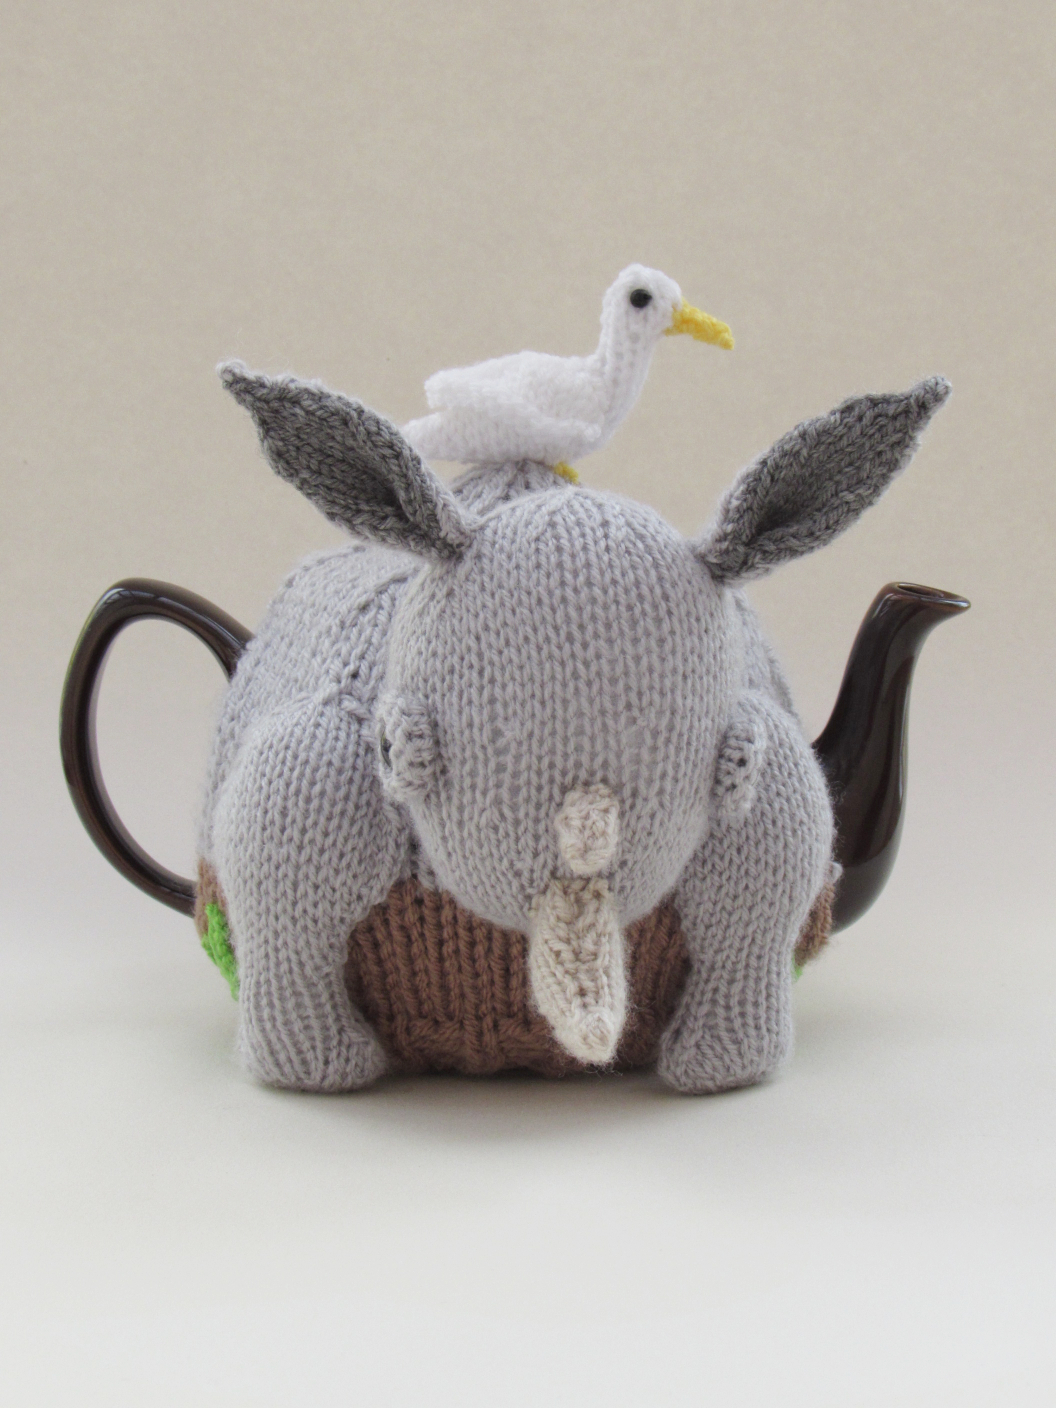 Rhino knitting pattern